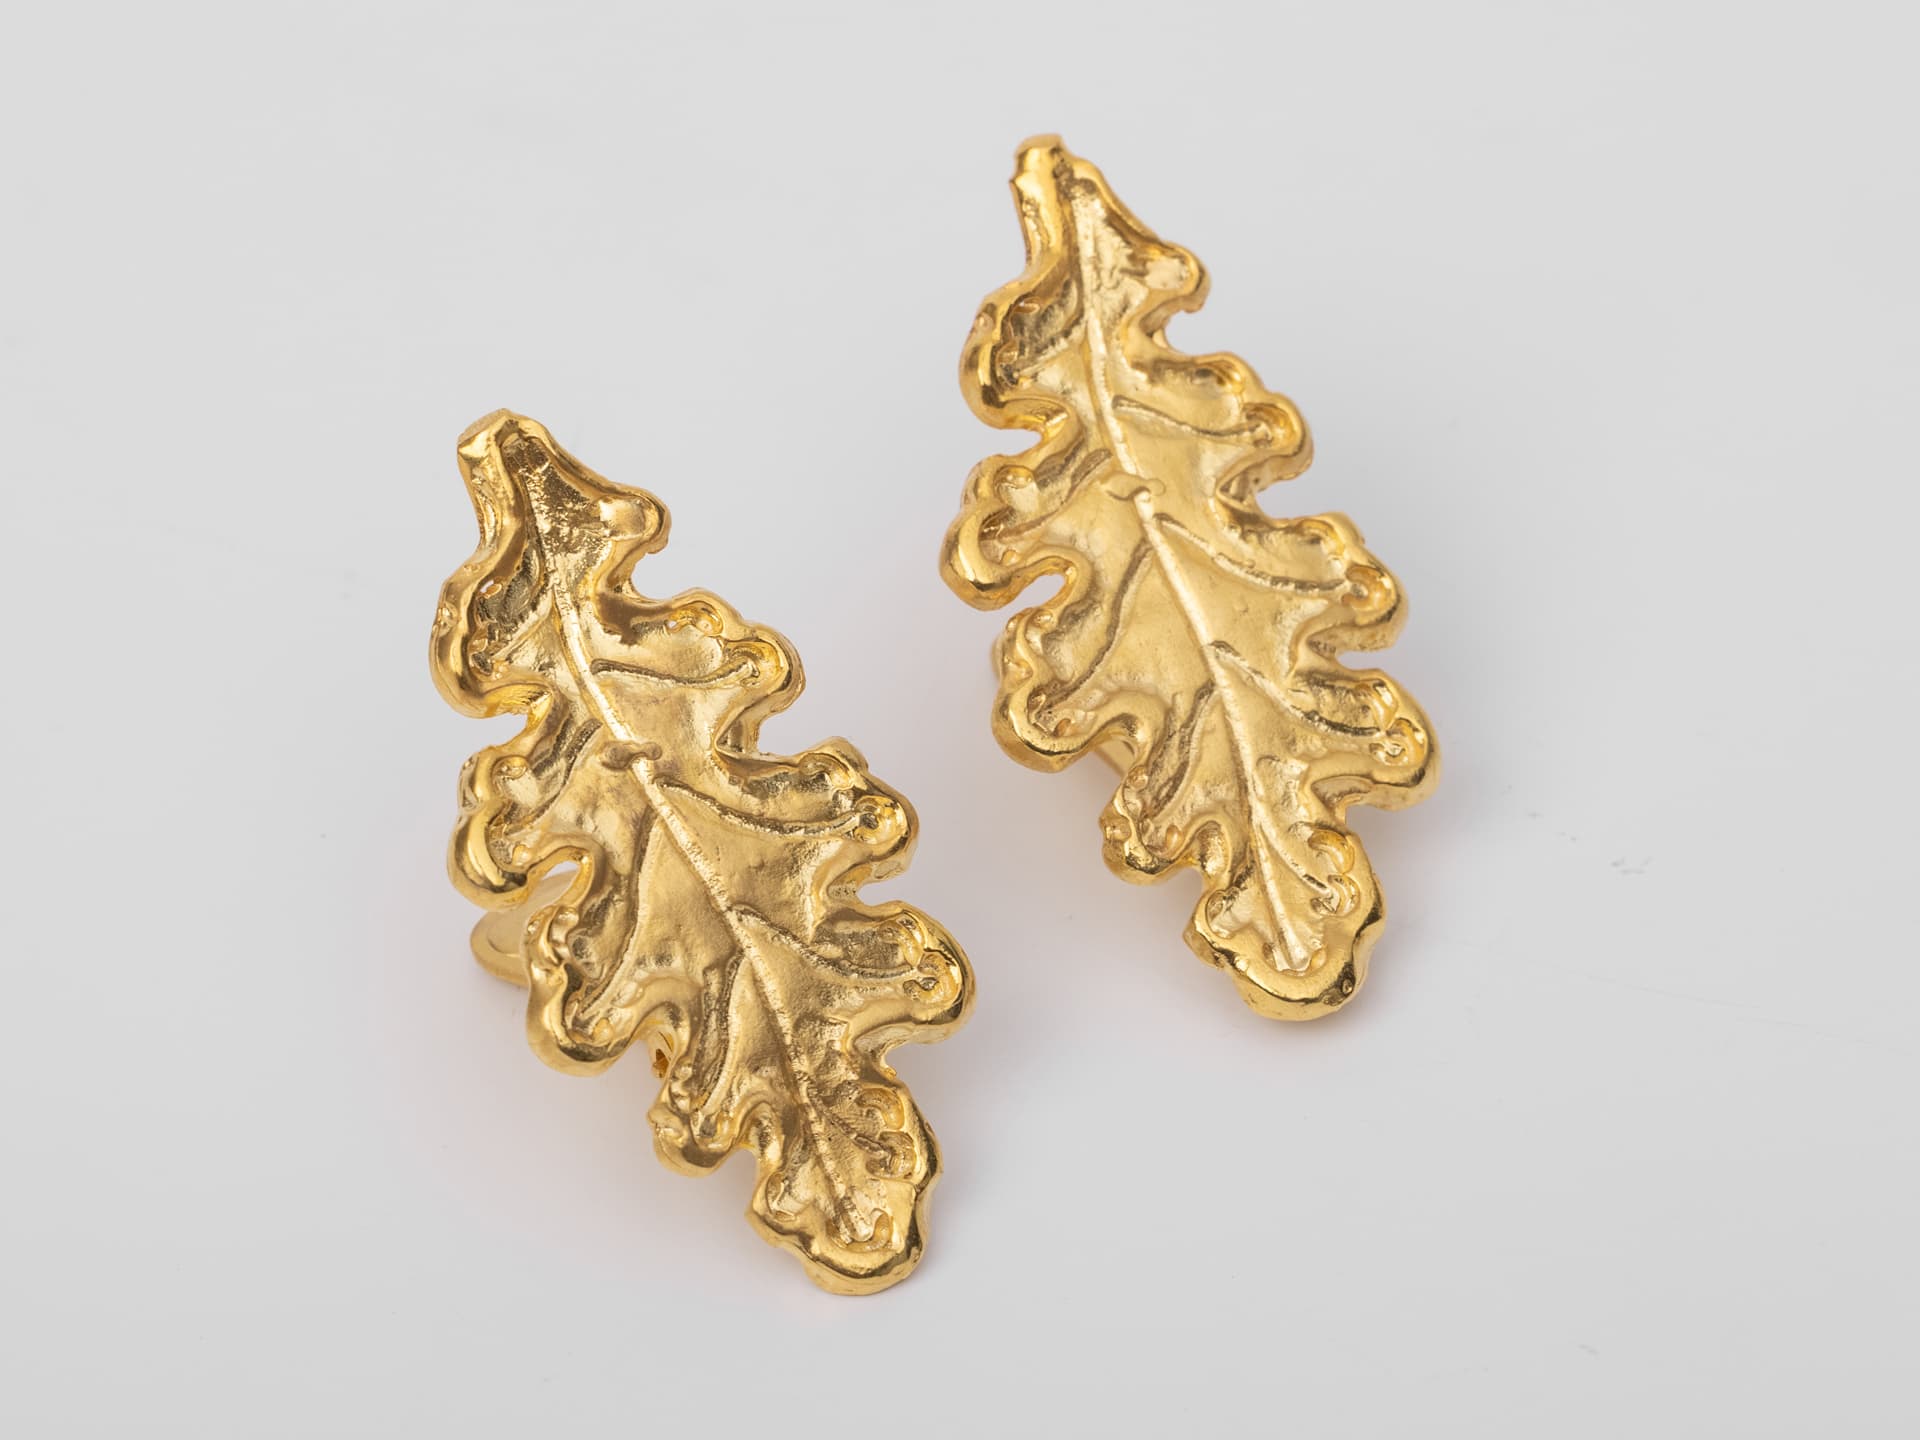 gold plated earrings in the shape of oak leaves